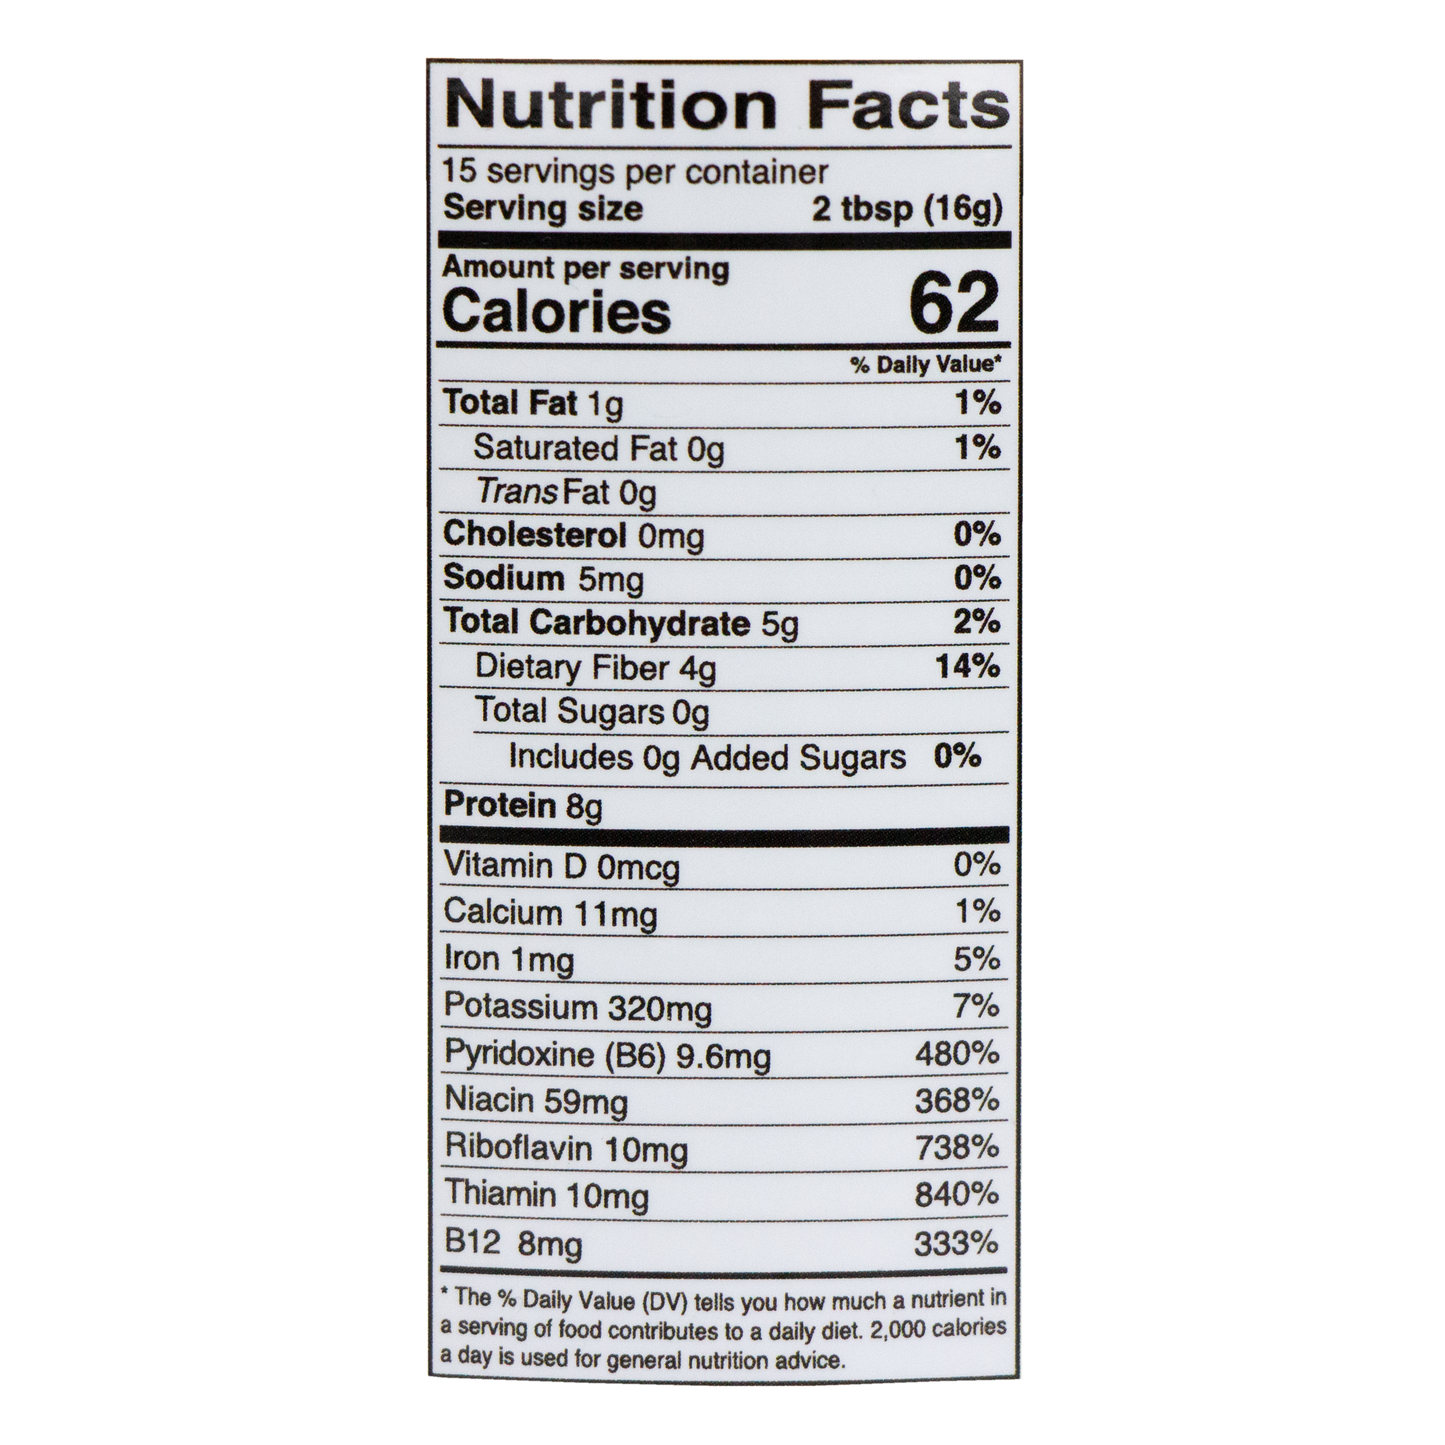 Kevala - Premium Nutritional Yeast